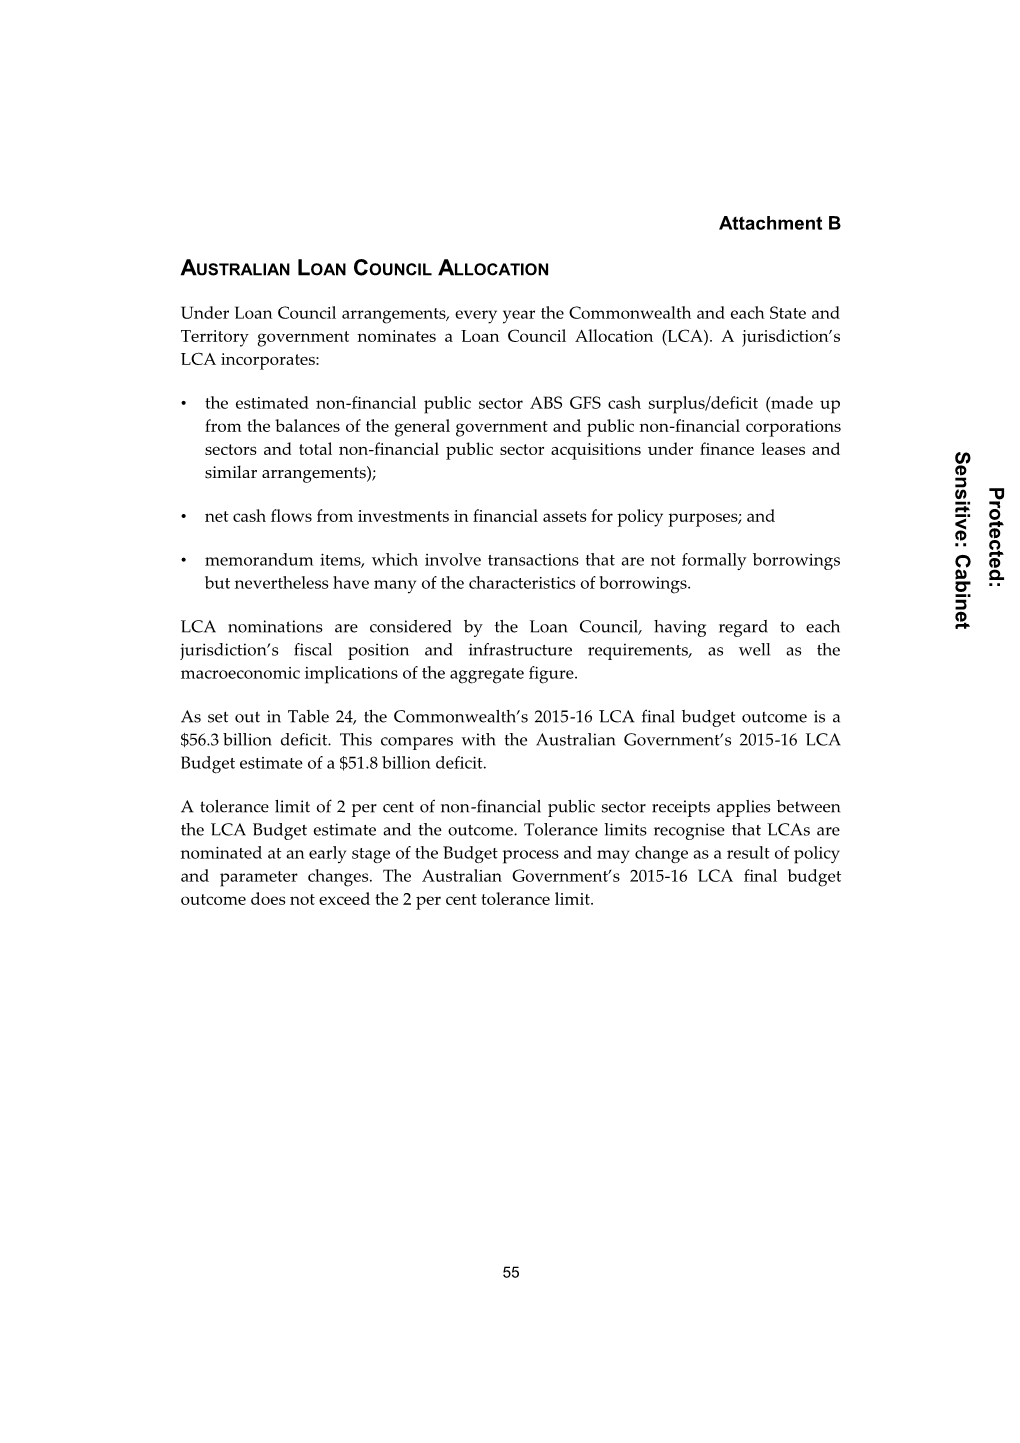 2015-16 Final Budget Outcome - Part 2: Australian Government Financial Statements - Attachment B